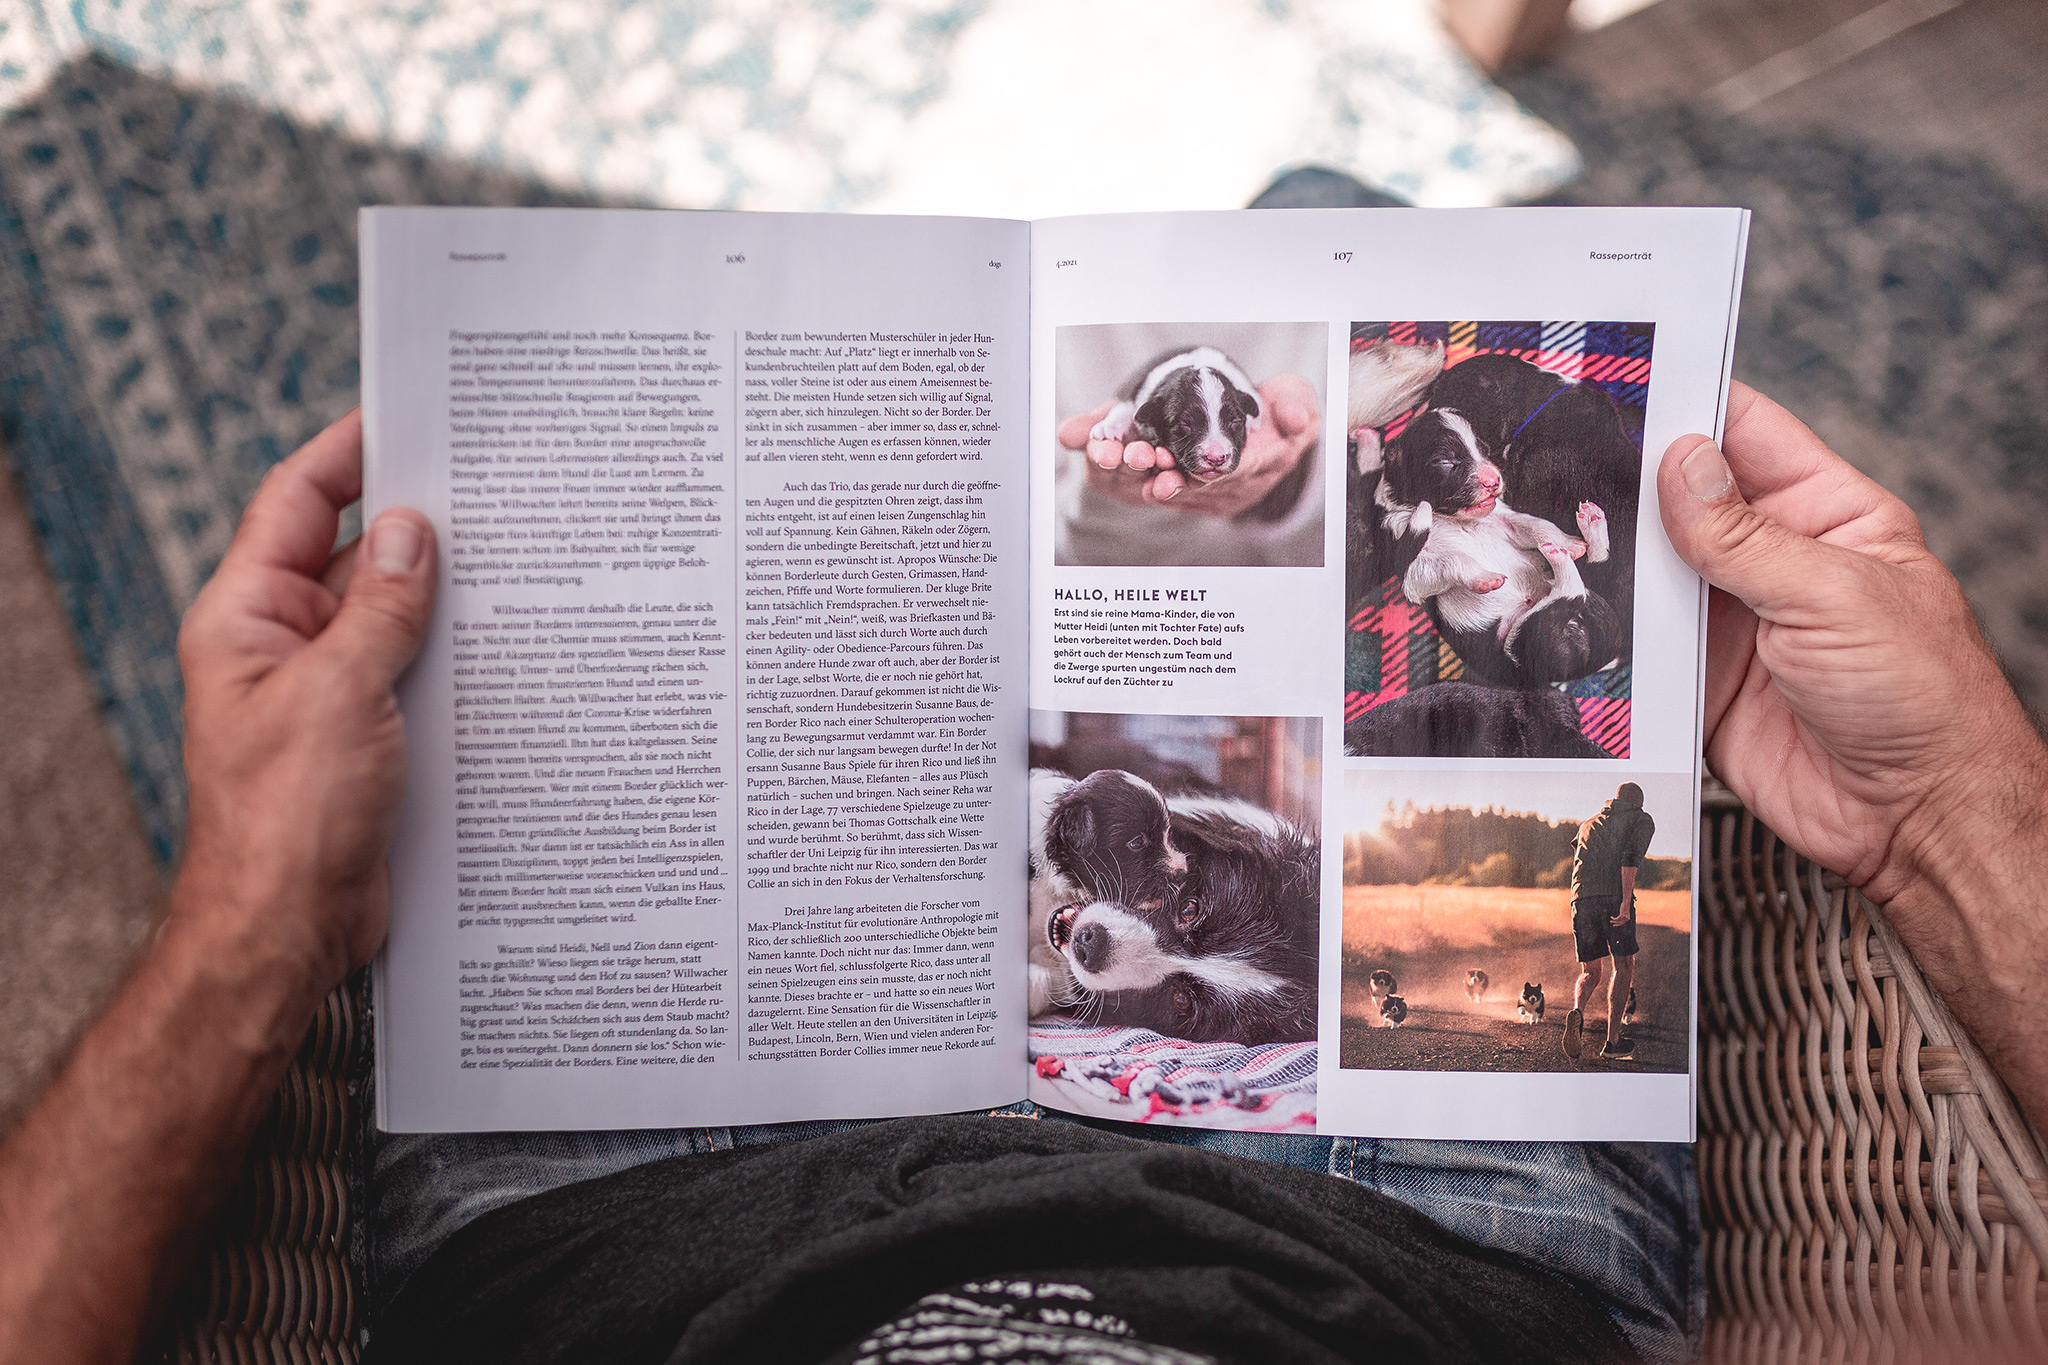 Broadmeadows im dogs-Magazin (Ausgabe 04|2021)